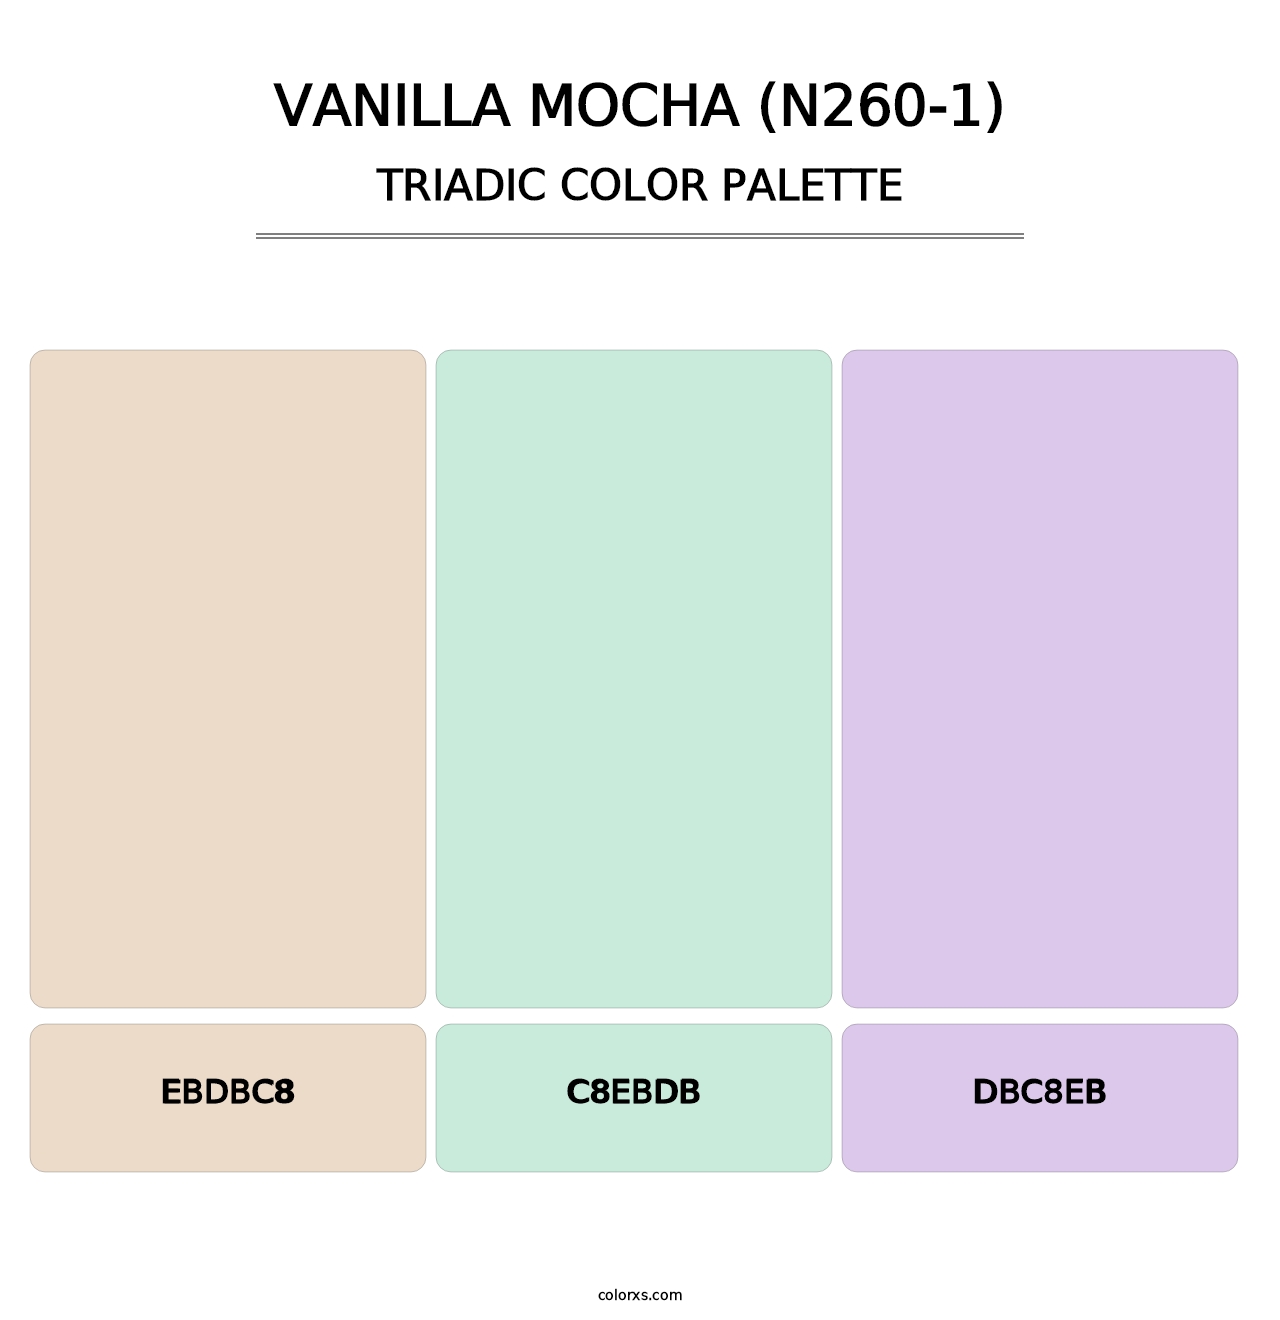 Vanilla Mocha (N260-1) - Triadic Color Palette